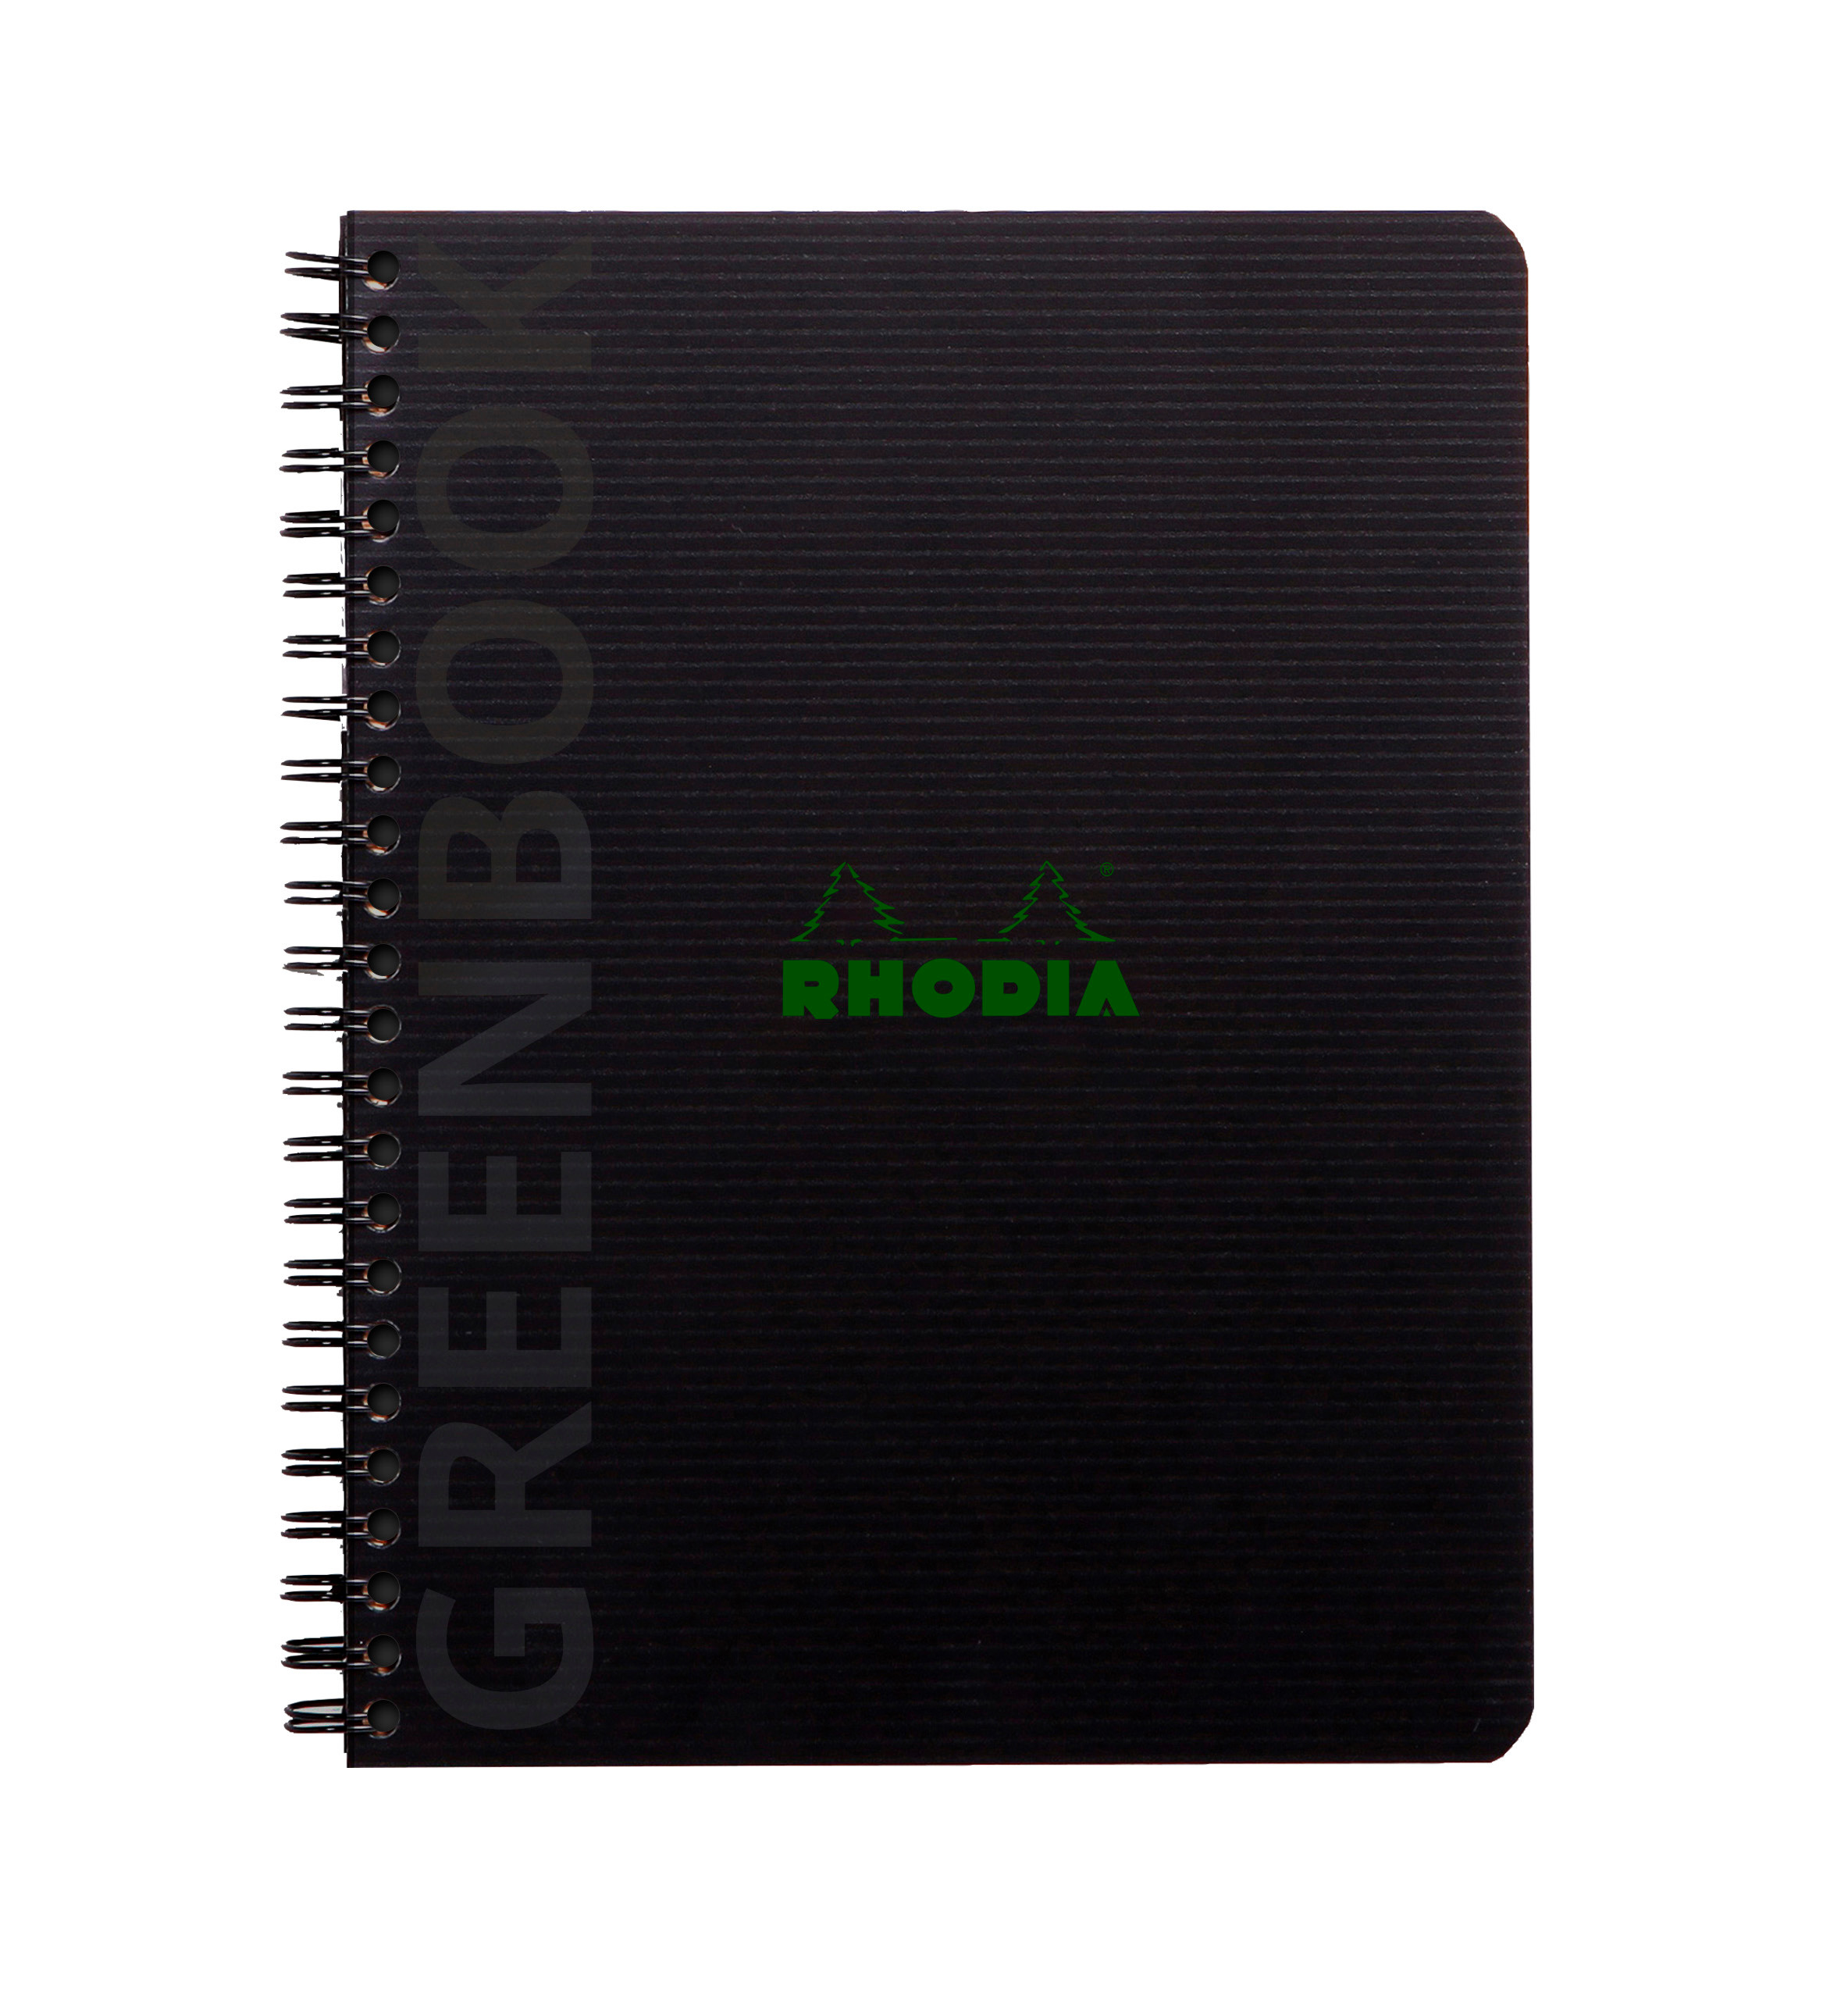 RHODIA Greenbook Carnet A5 119913C quad. 90g 160 f.